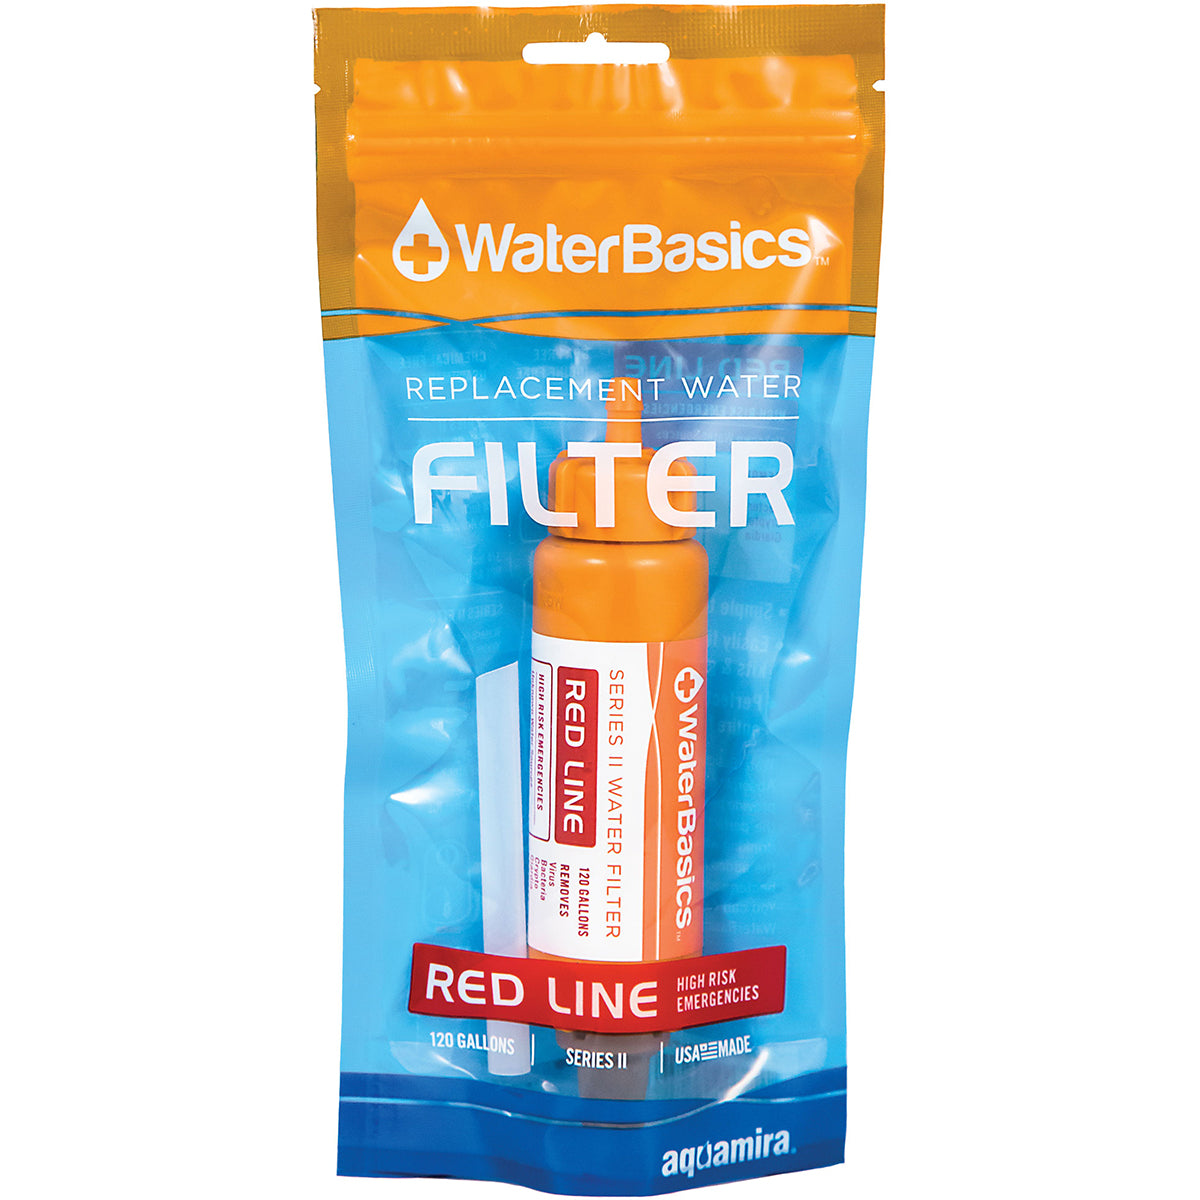 WaterBasics Series II RED Line Emergency Water Filter Aquamira